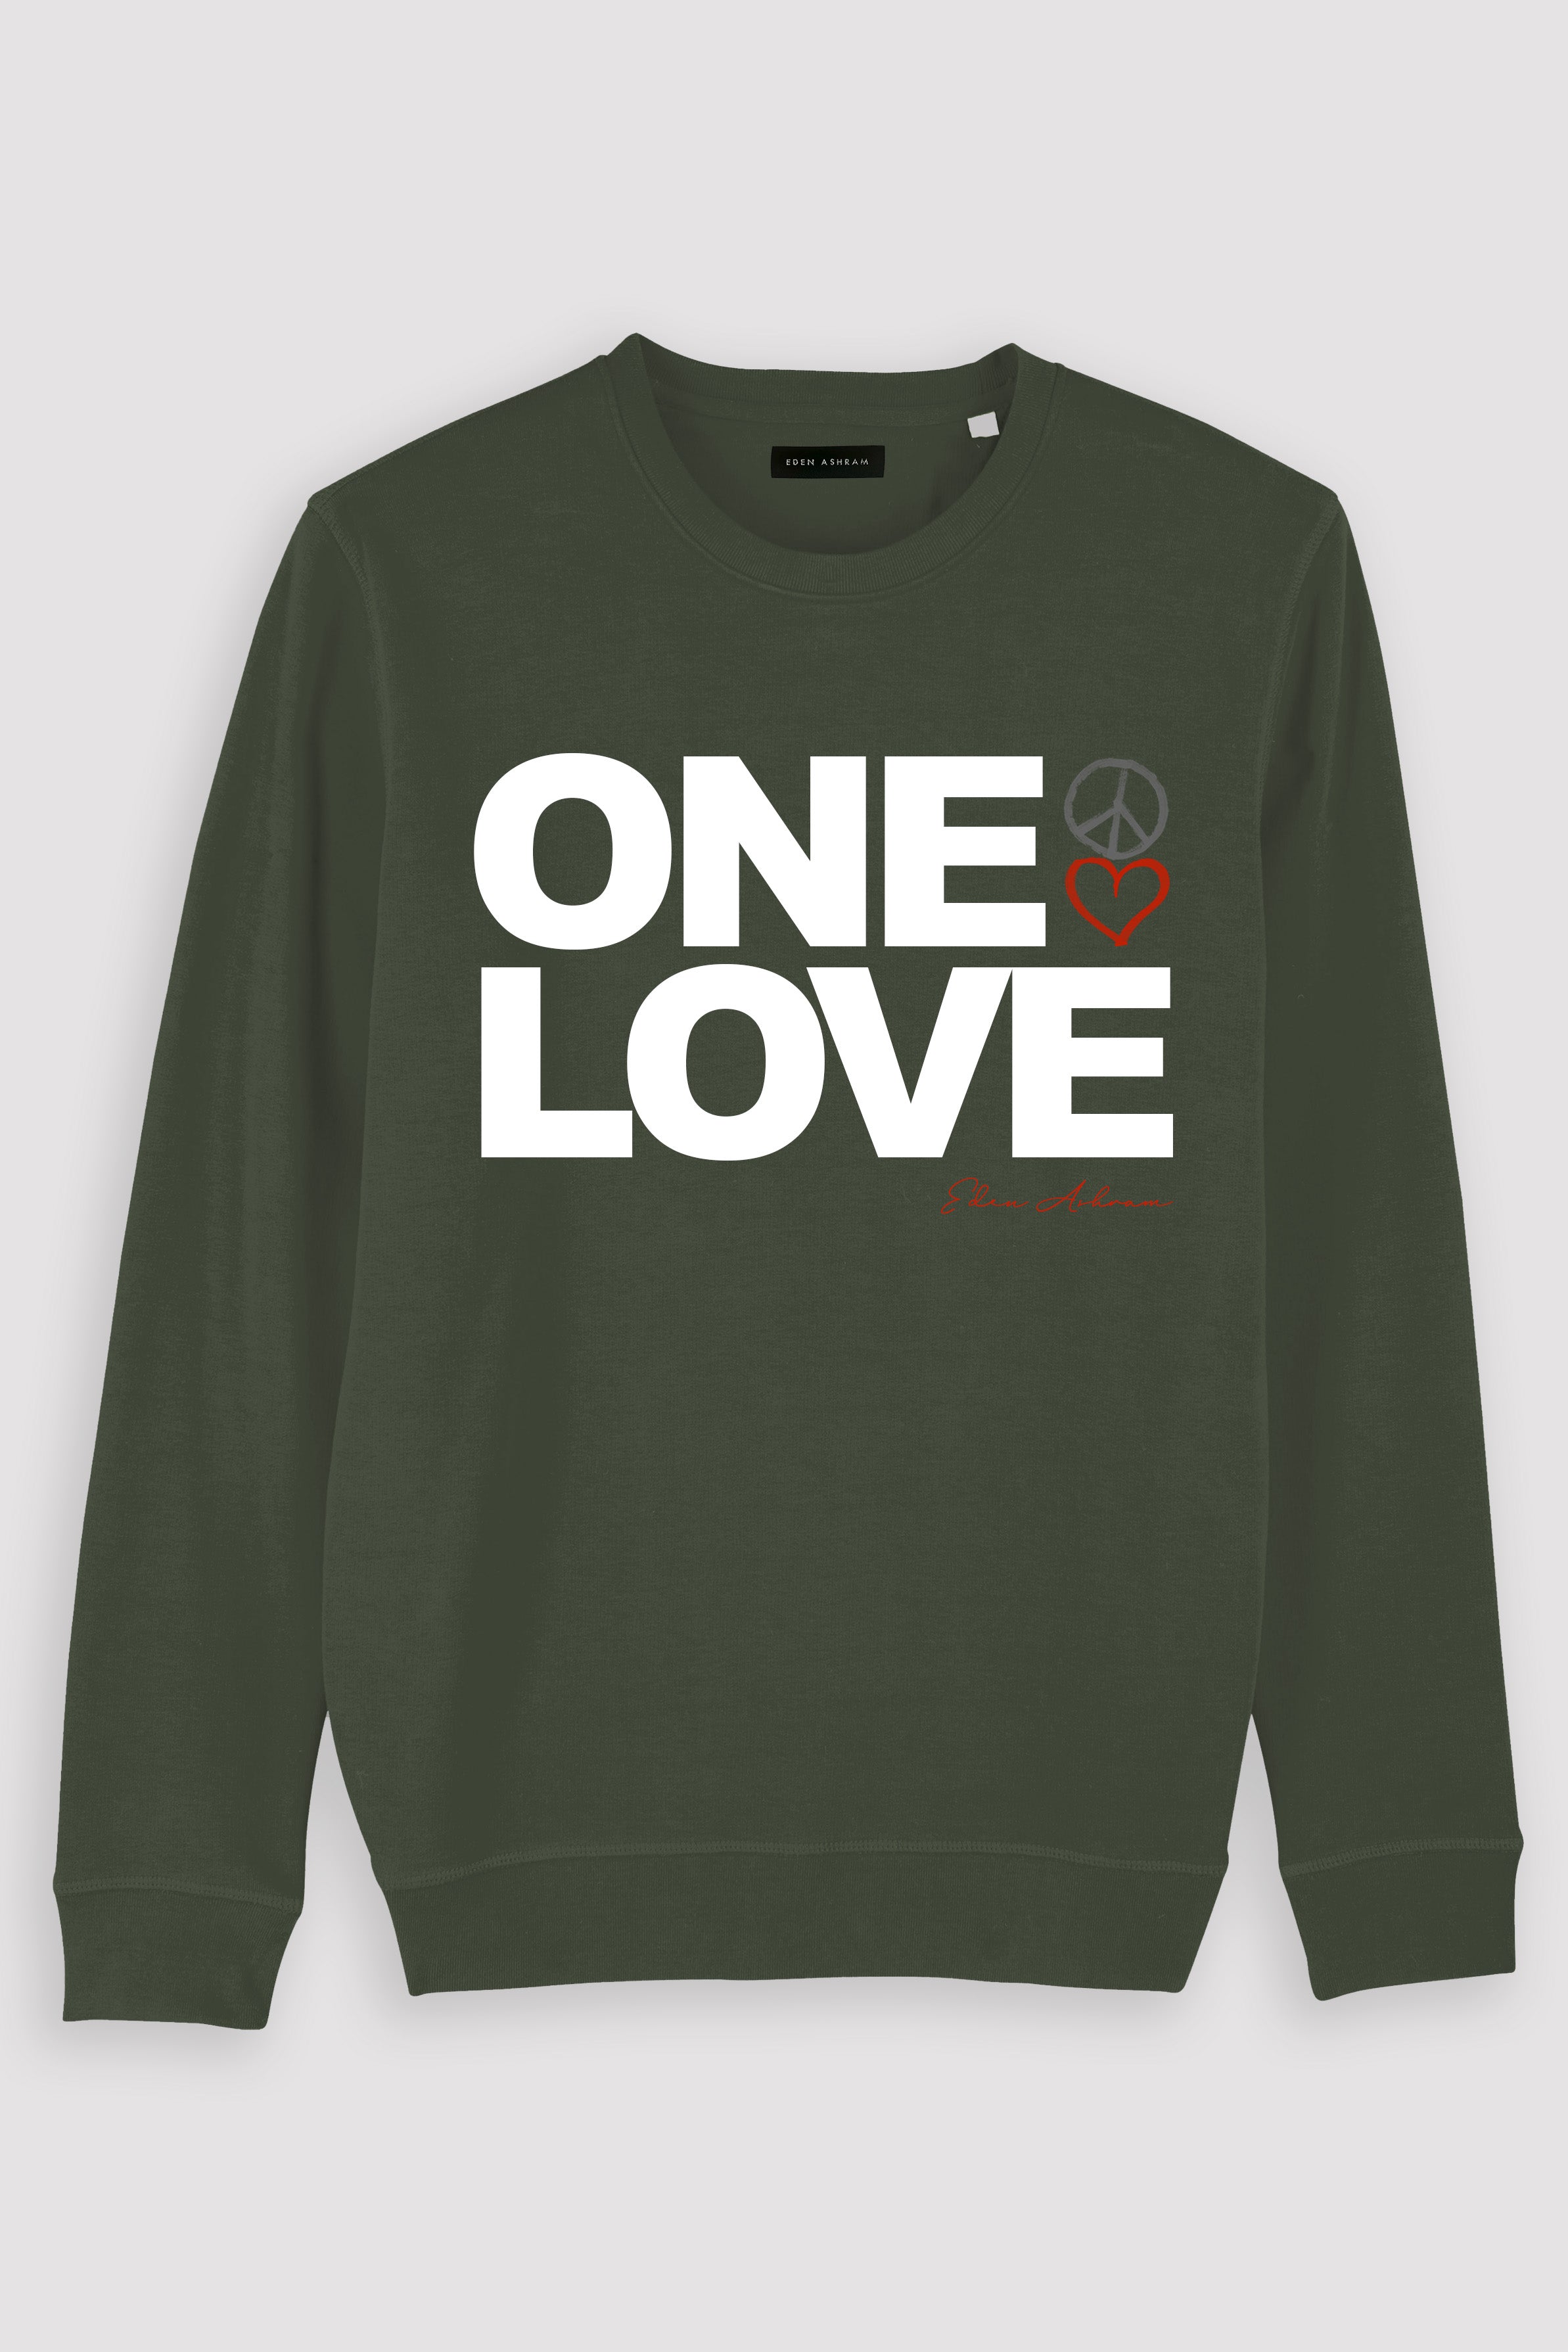 Eden Ashram One Love Premium Crew Neck Sweatshirt Khaki